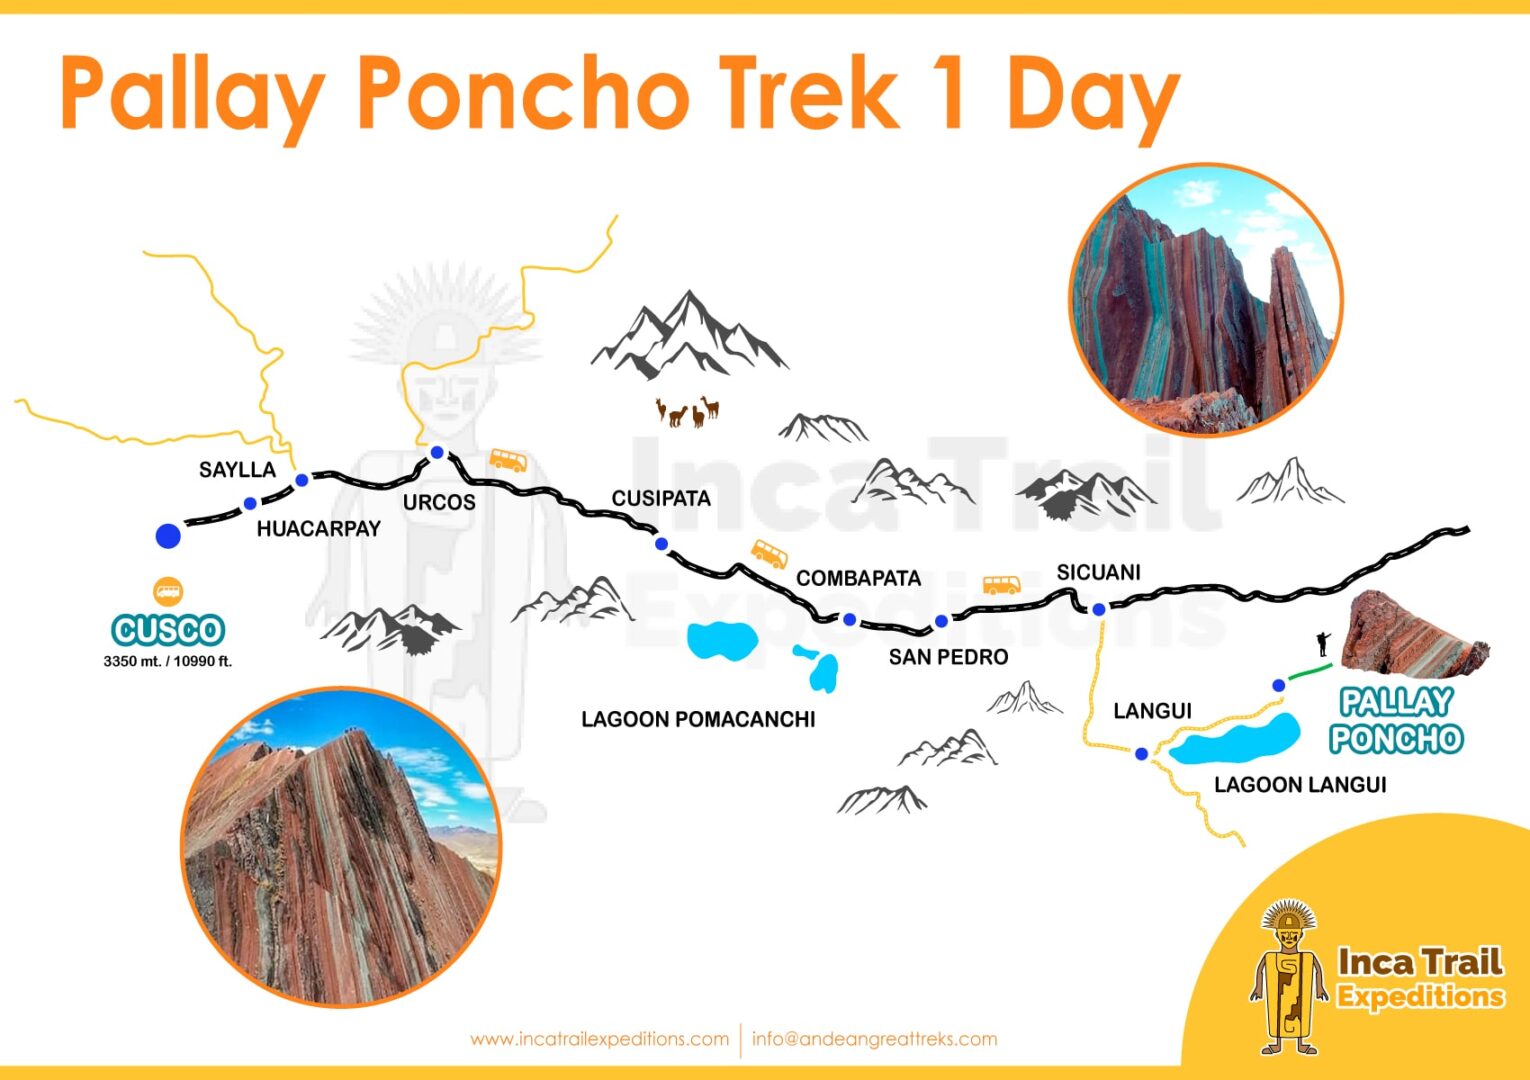 PALLAY-PONCHO-TREK-1-DAY-INCA-TRAIL-EXPEDITIONS